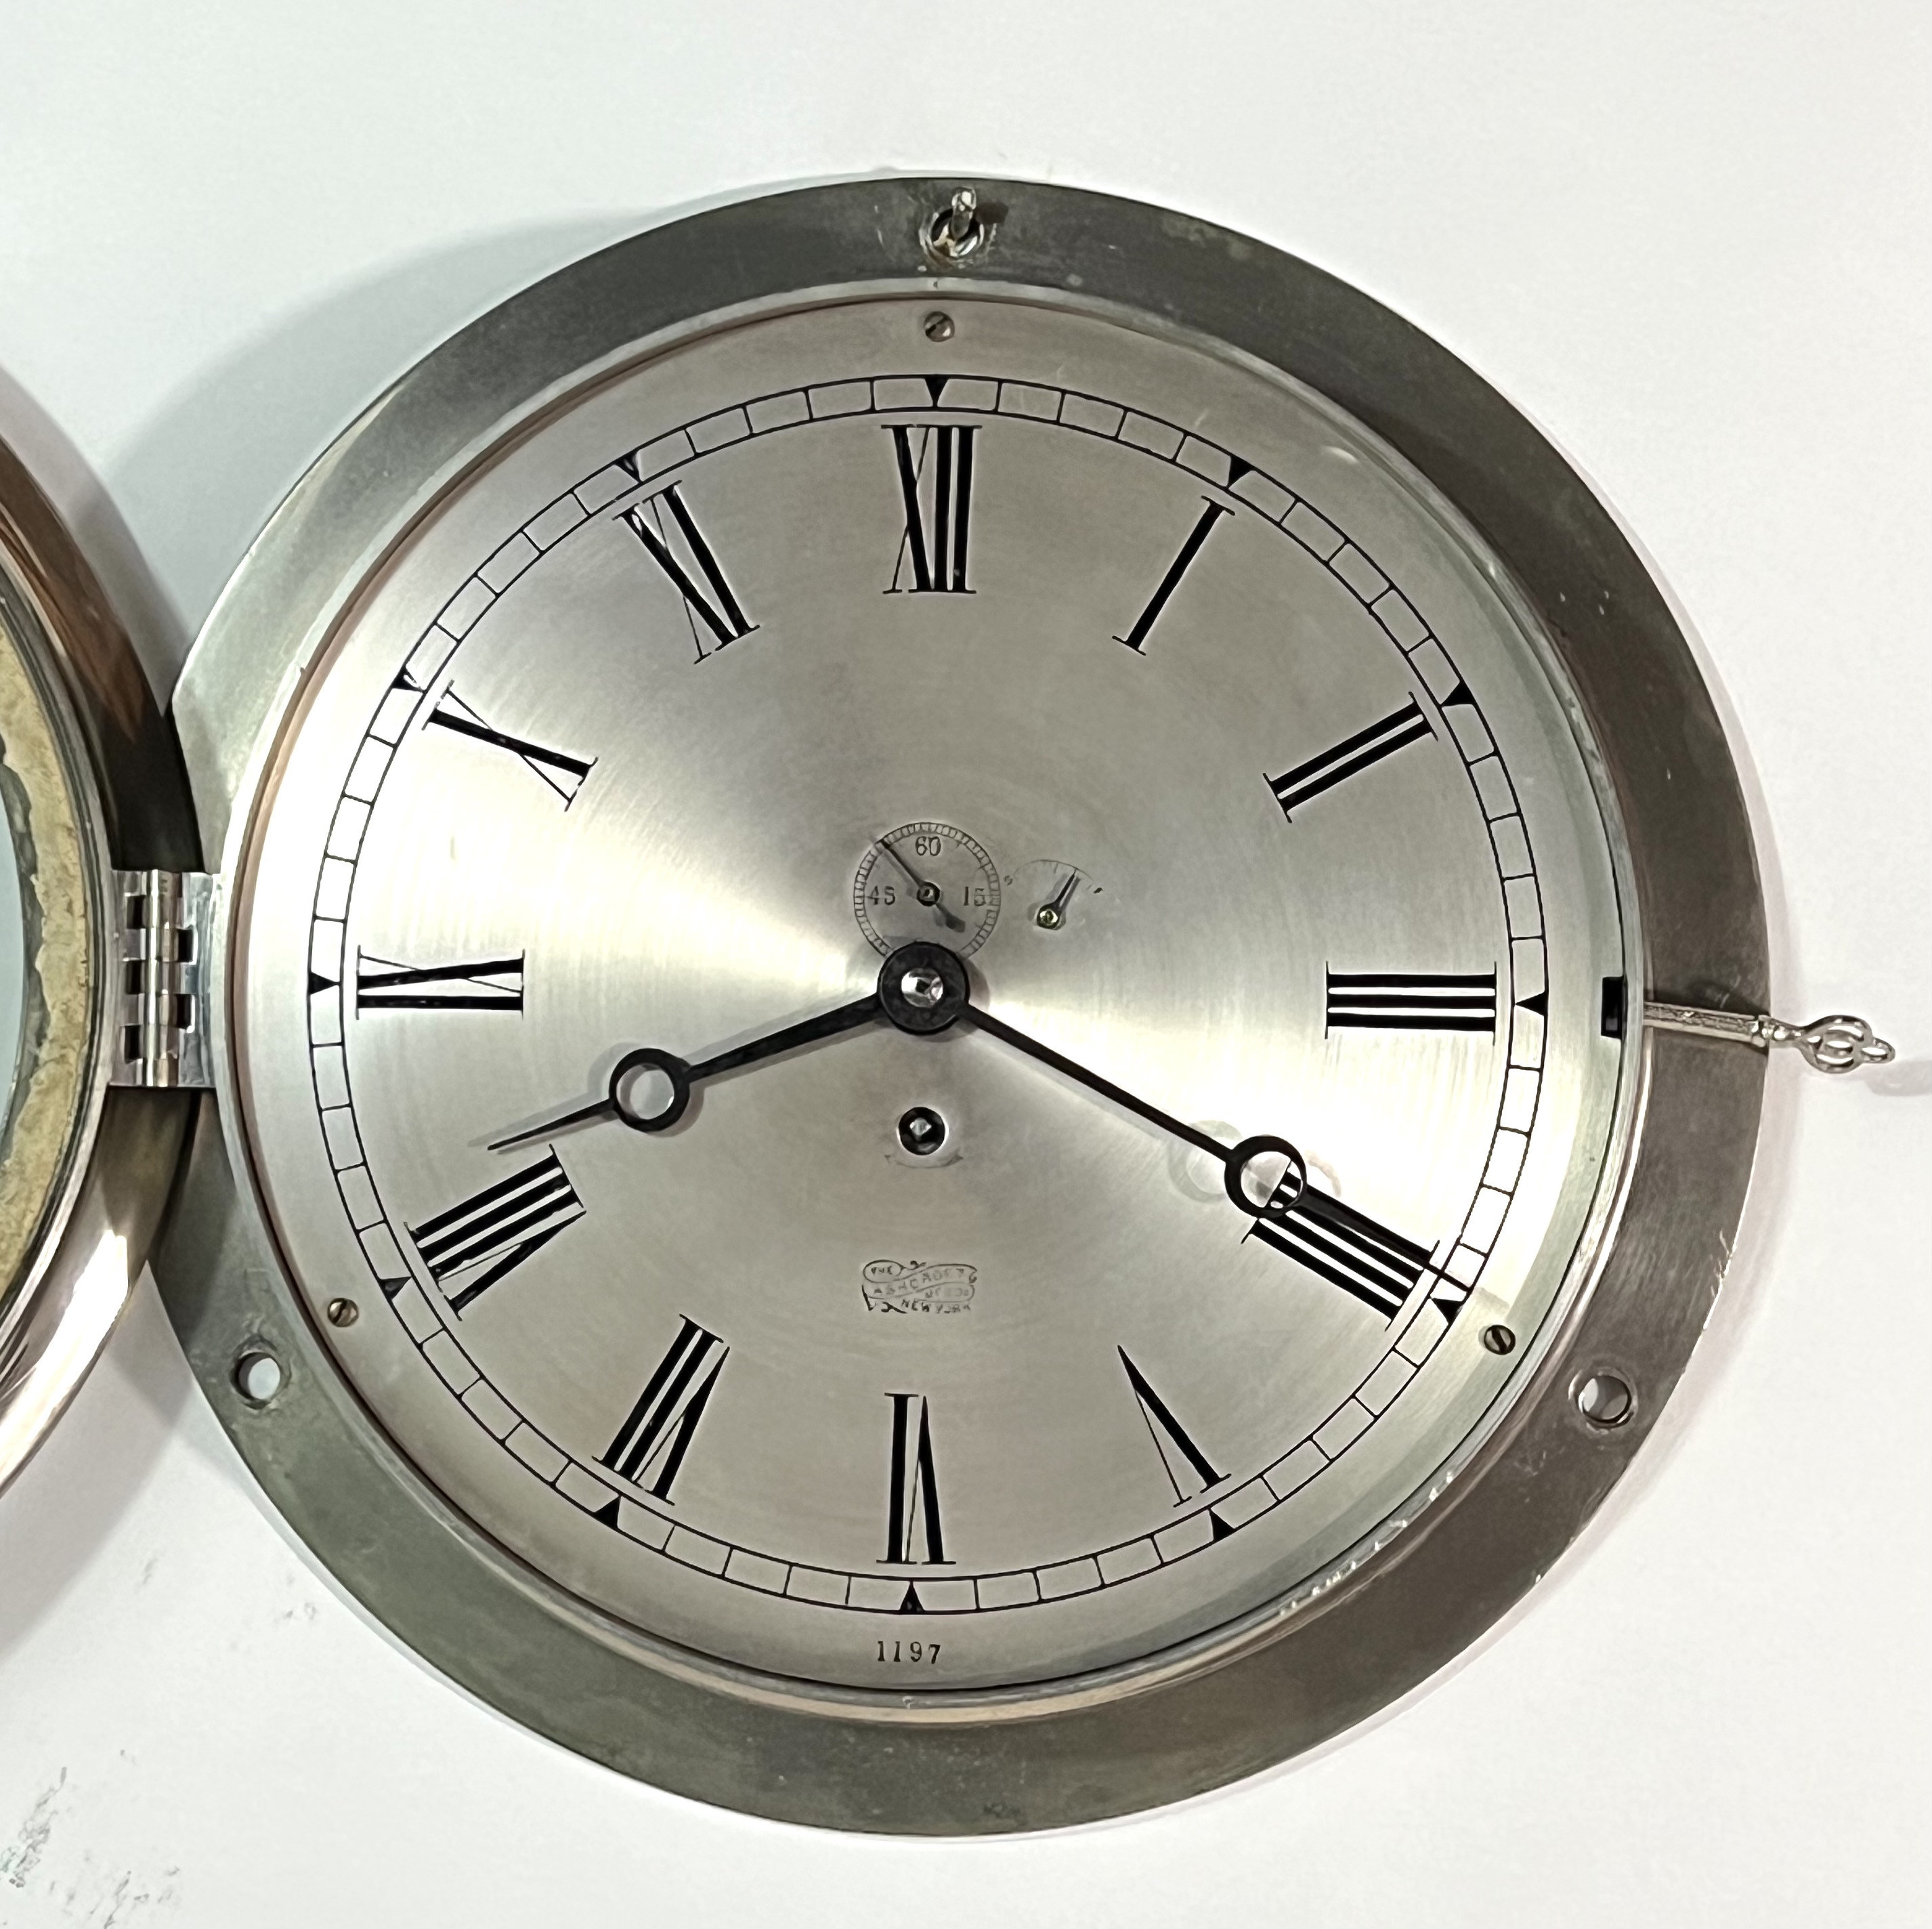 Fairhaven Manufacturing Co. 10 inch Marine Clock